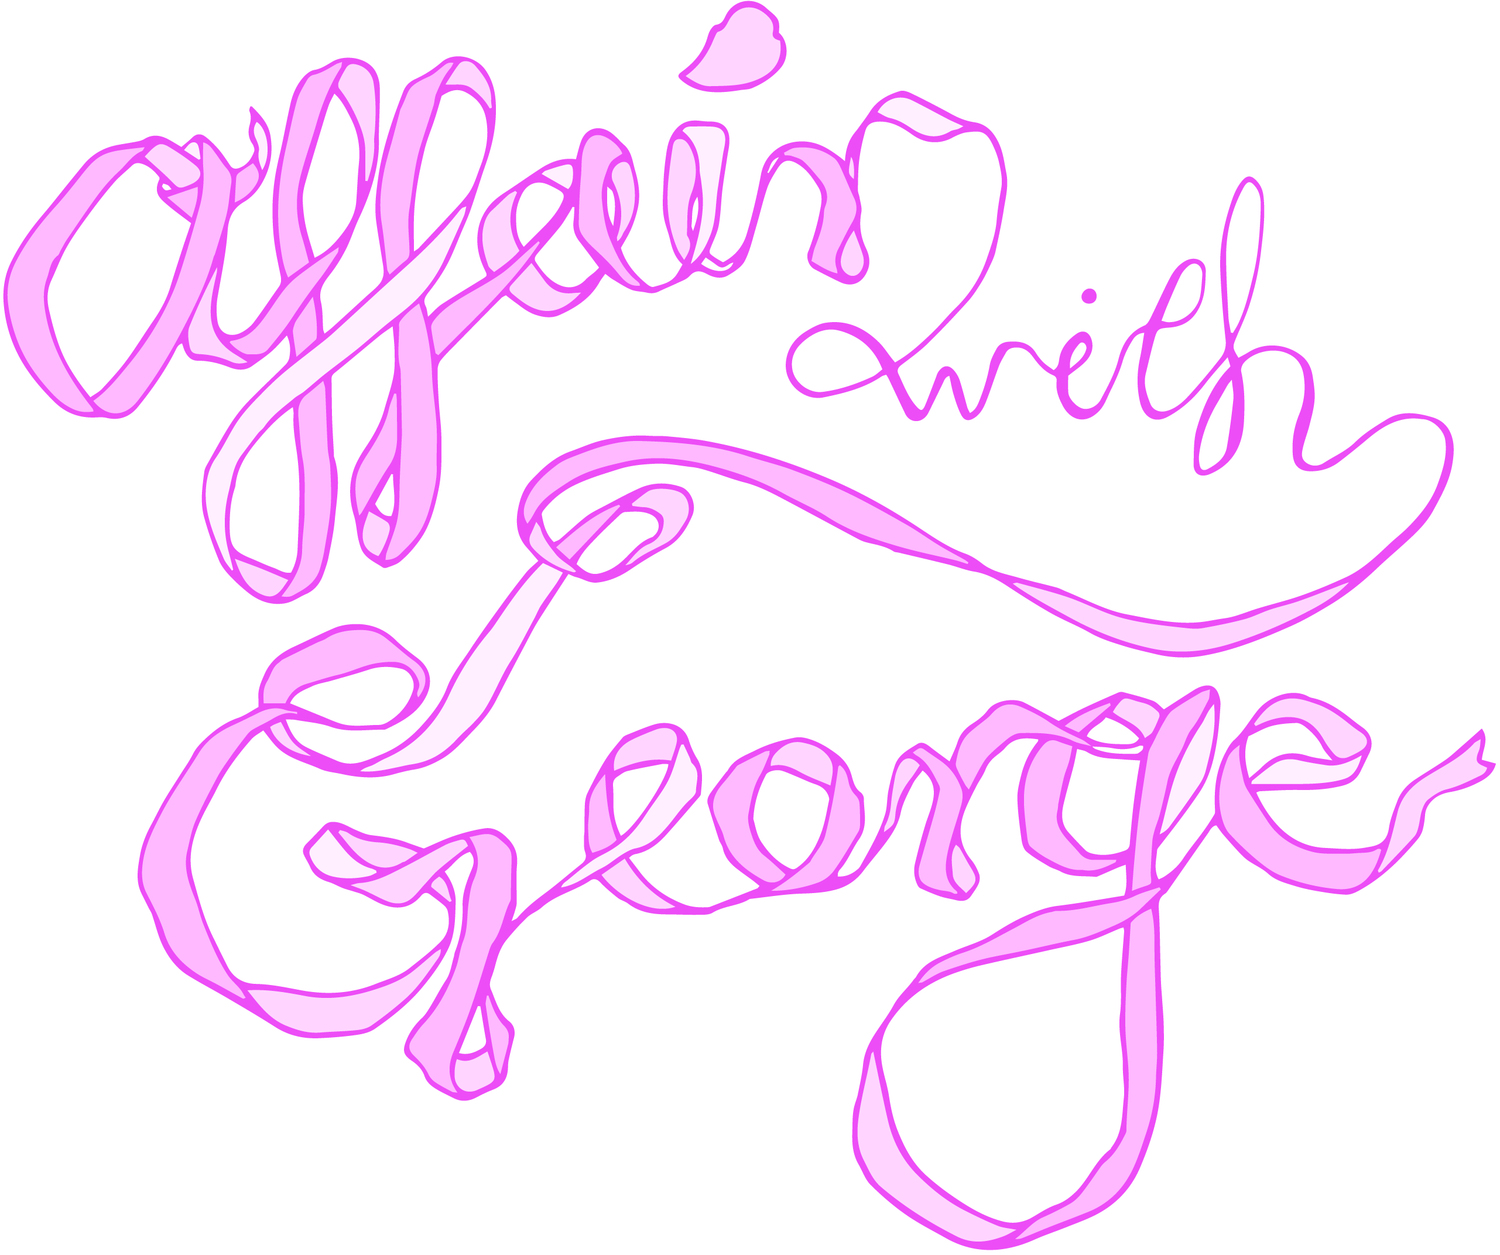 Affair with George